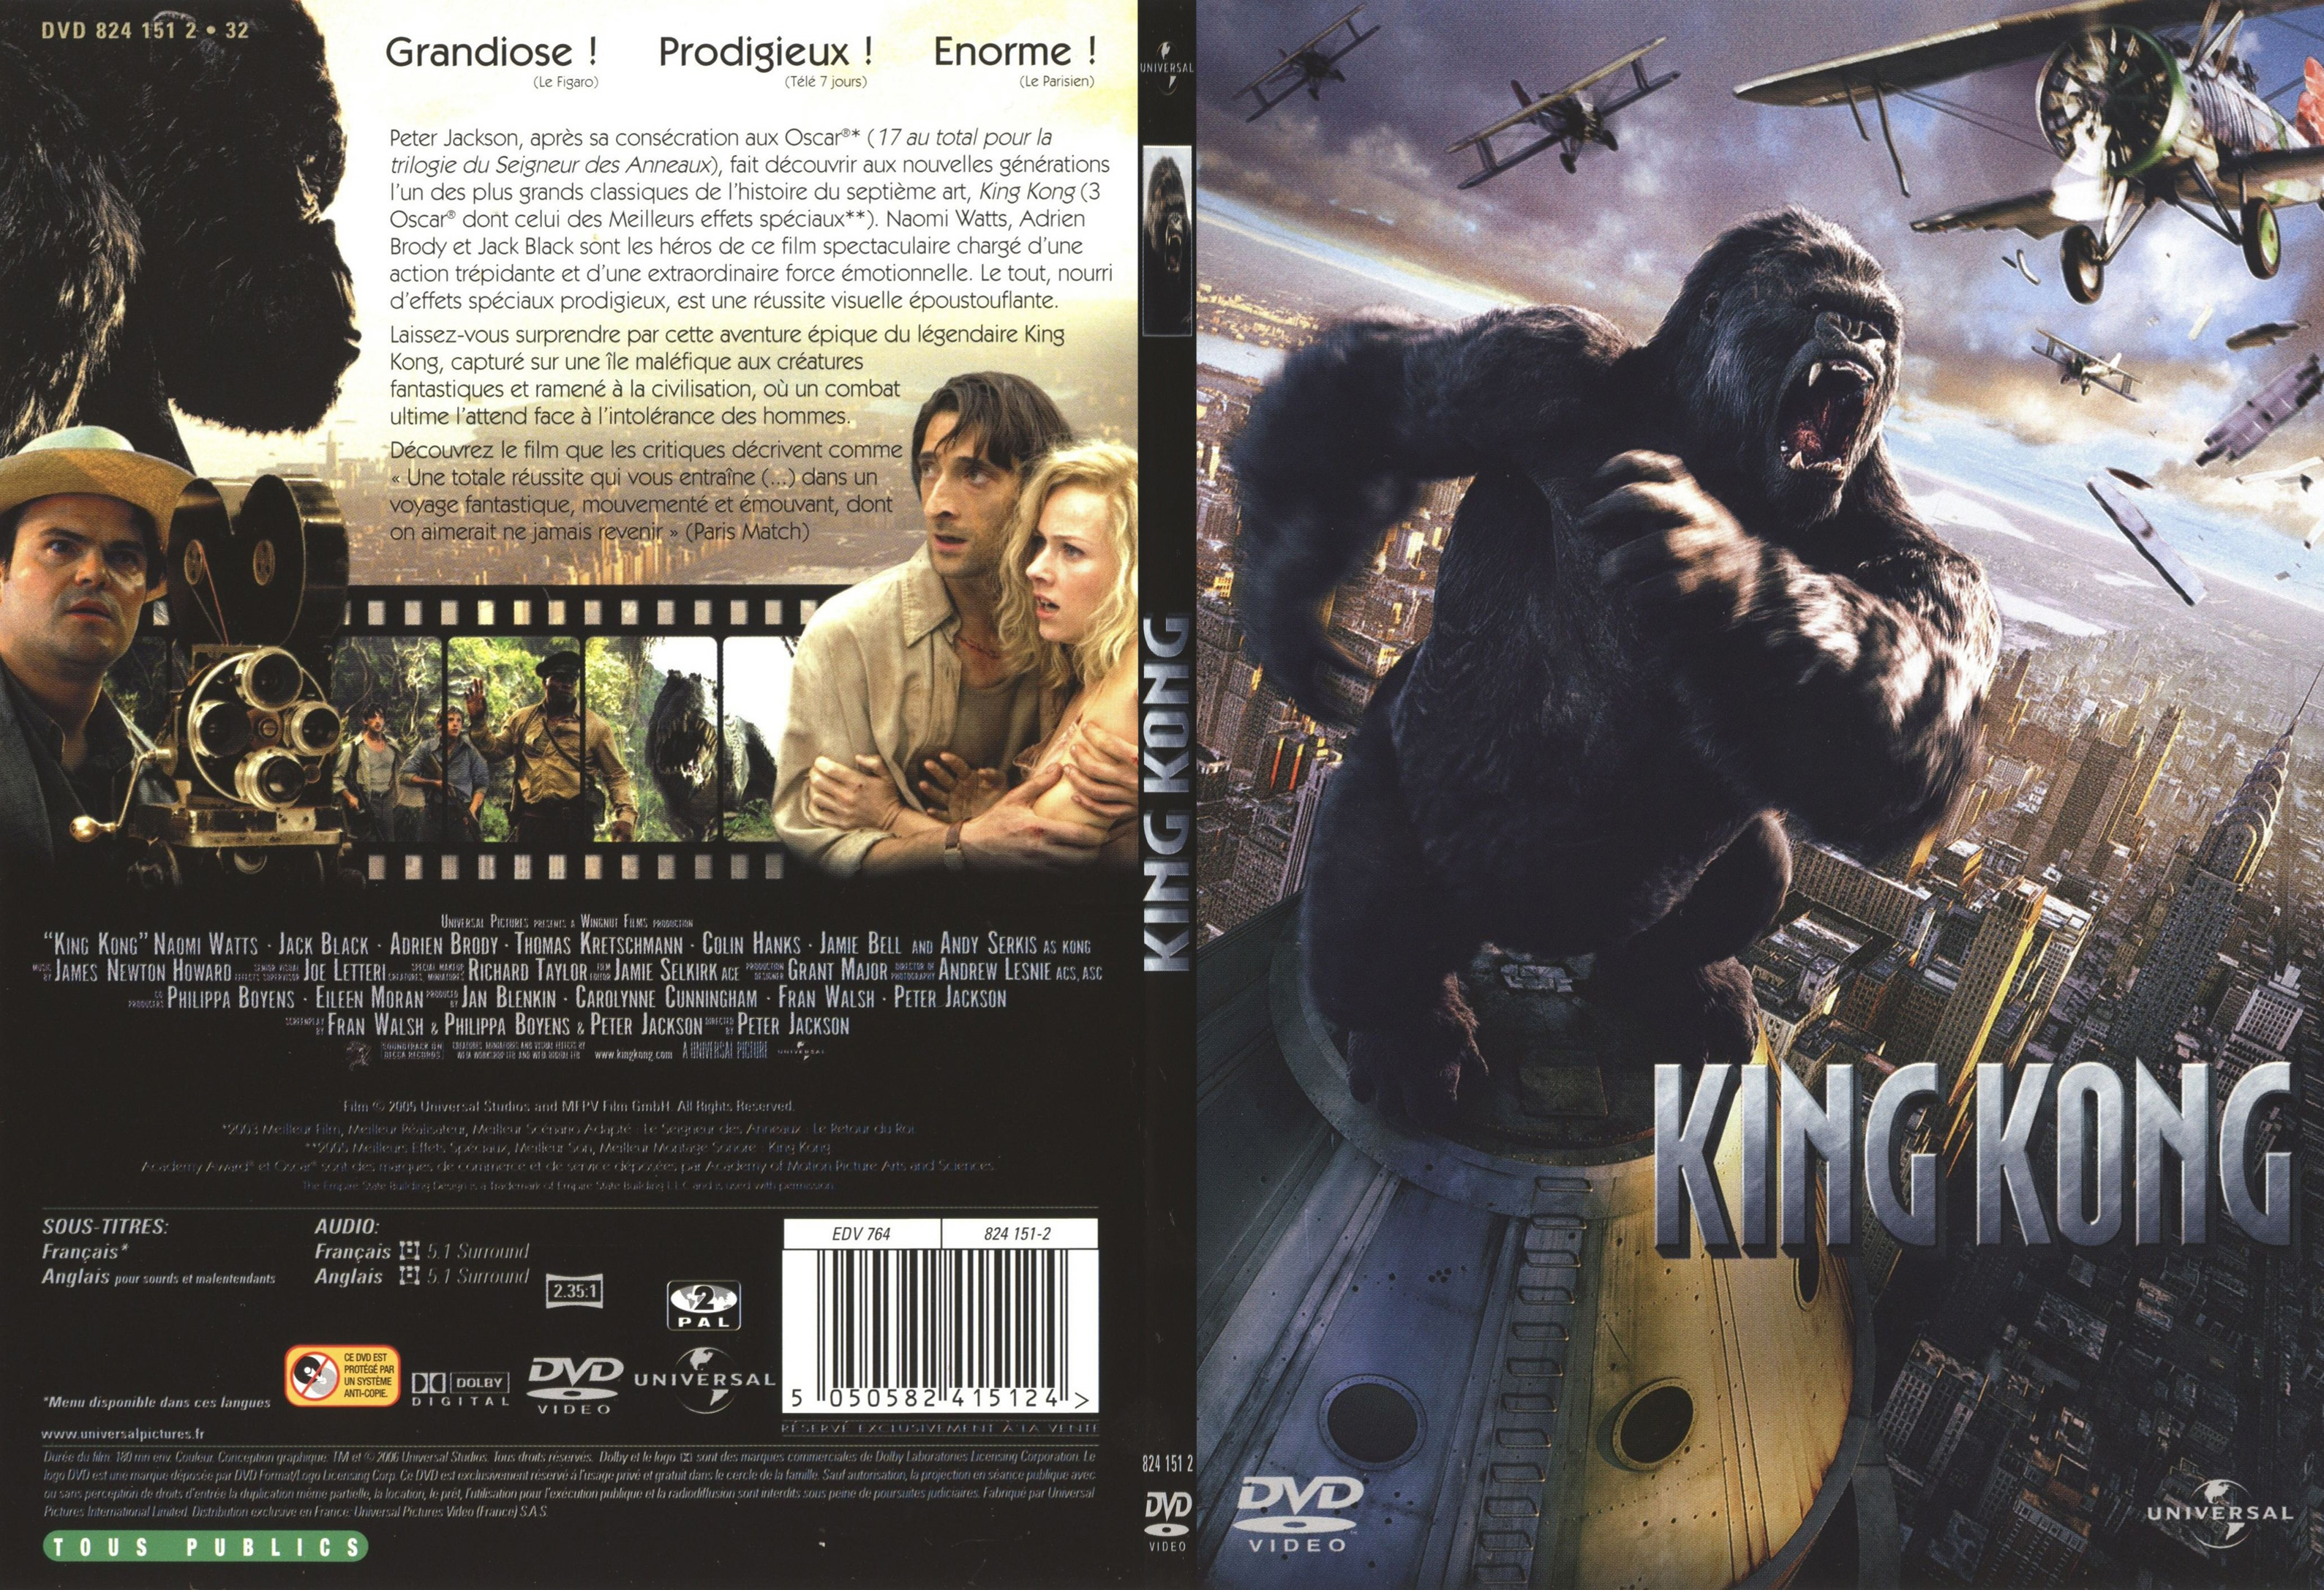 Jaquette DVD King kong 2005 - SLIM